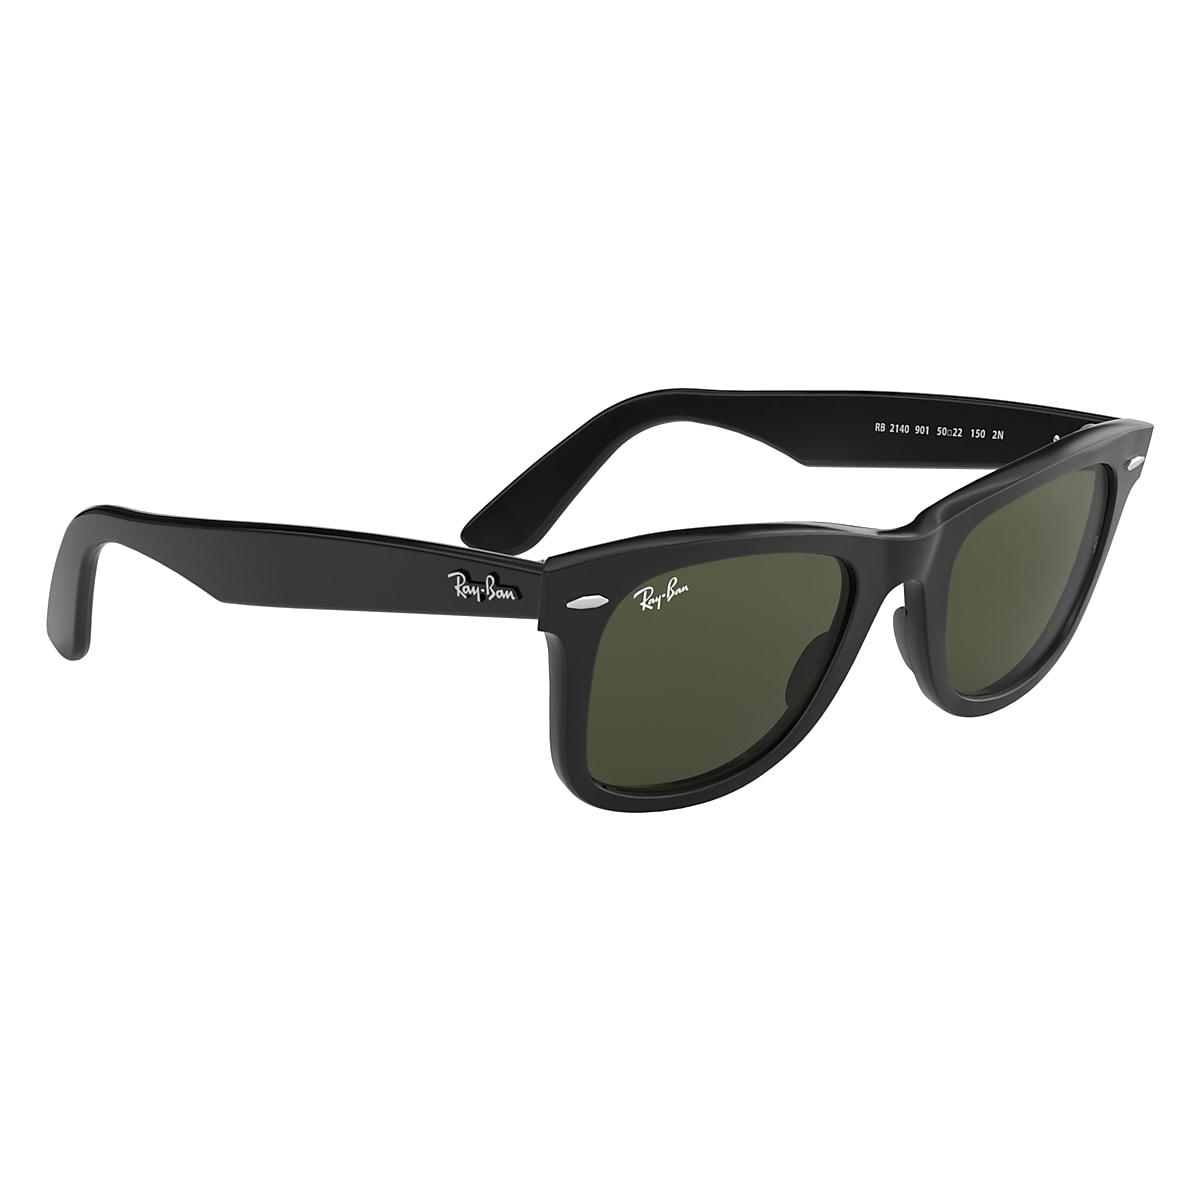 ORIGINAL WAYFARER CLASSIC Sunglasses in Black and Green - RB2140 | Ray-Ban®  GB